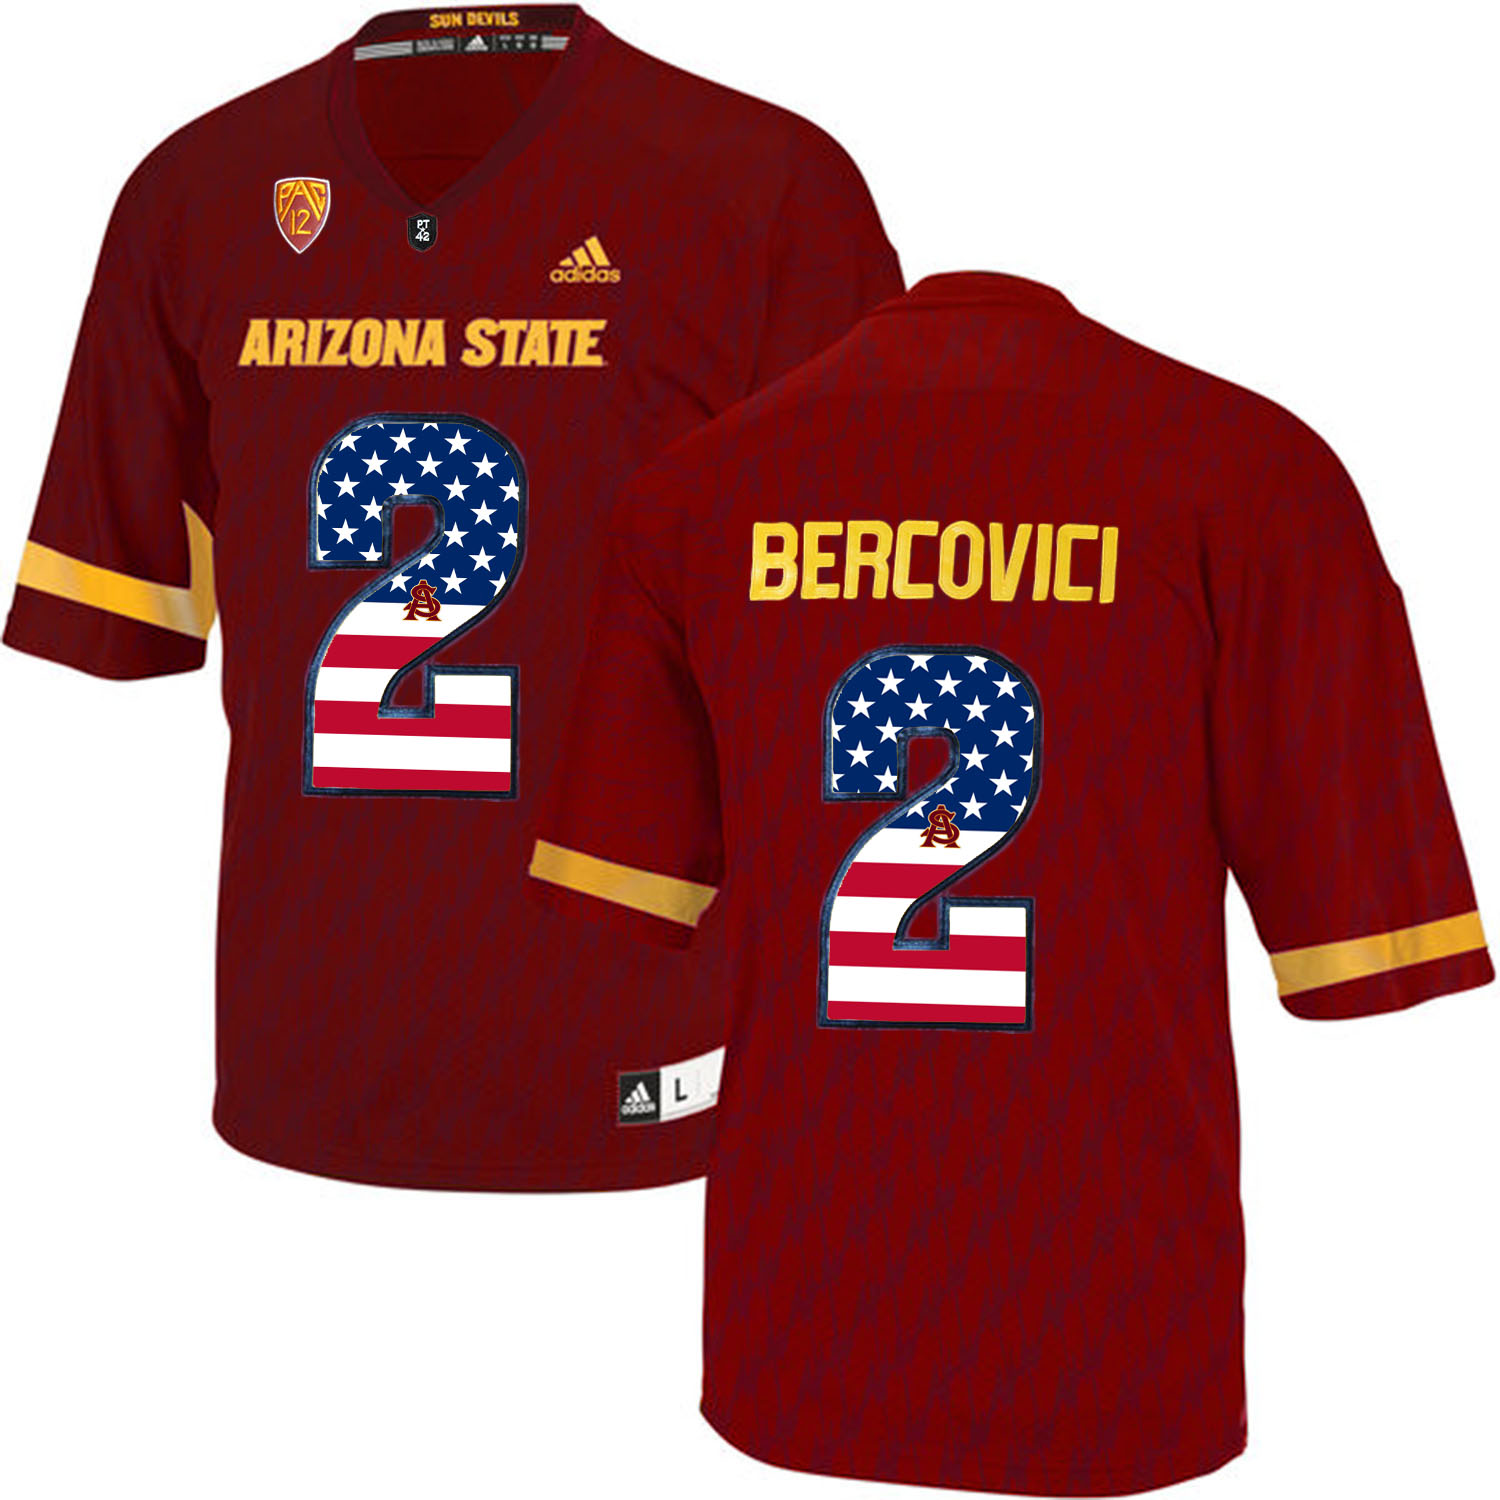 Arizona State Sun Devils 2 Mike Bercovici Red College Football Jersey